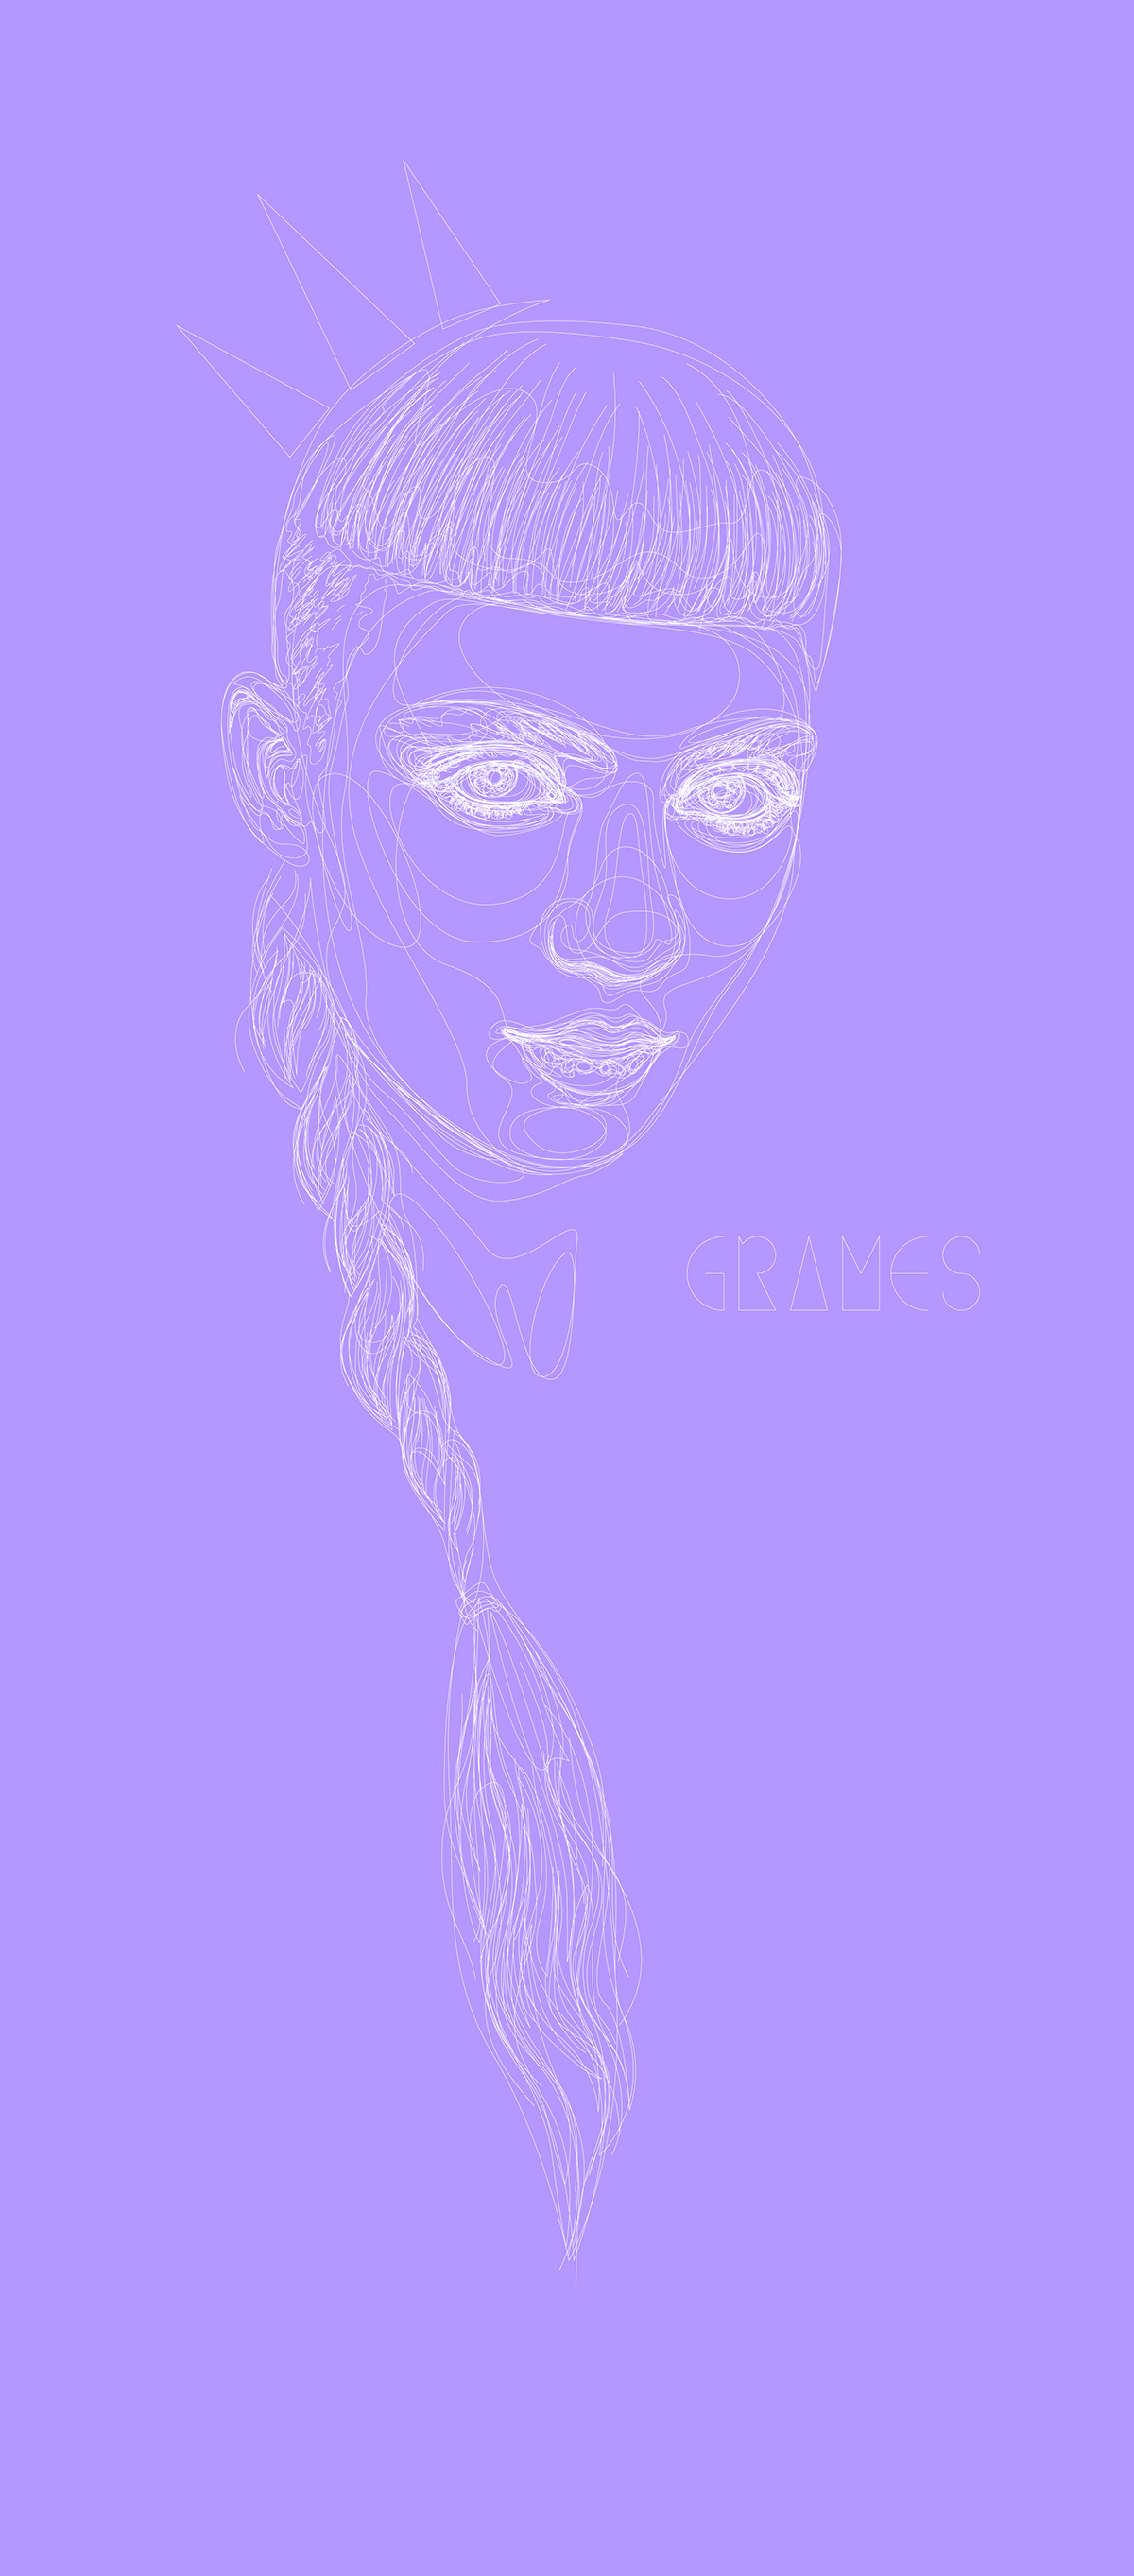 grimes  Music claire boucher purple green blue  eyes vector Electra portrait hair White braid pink